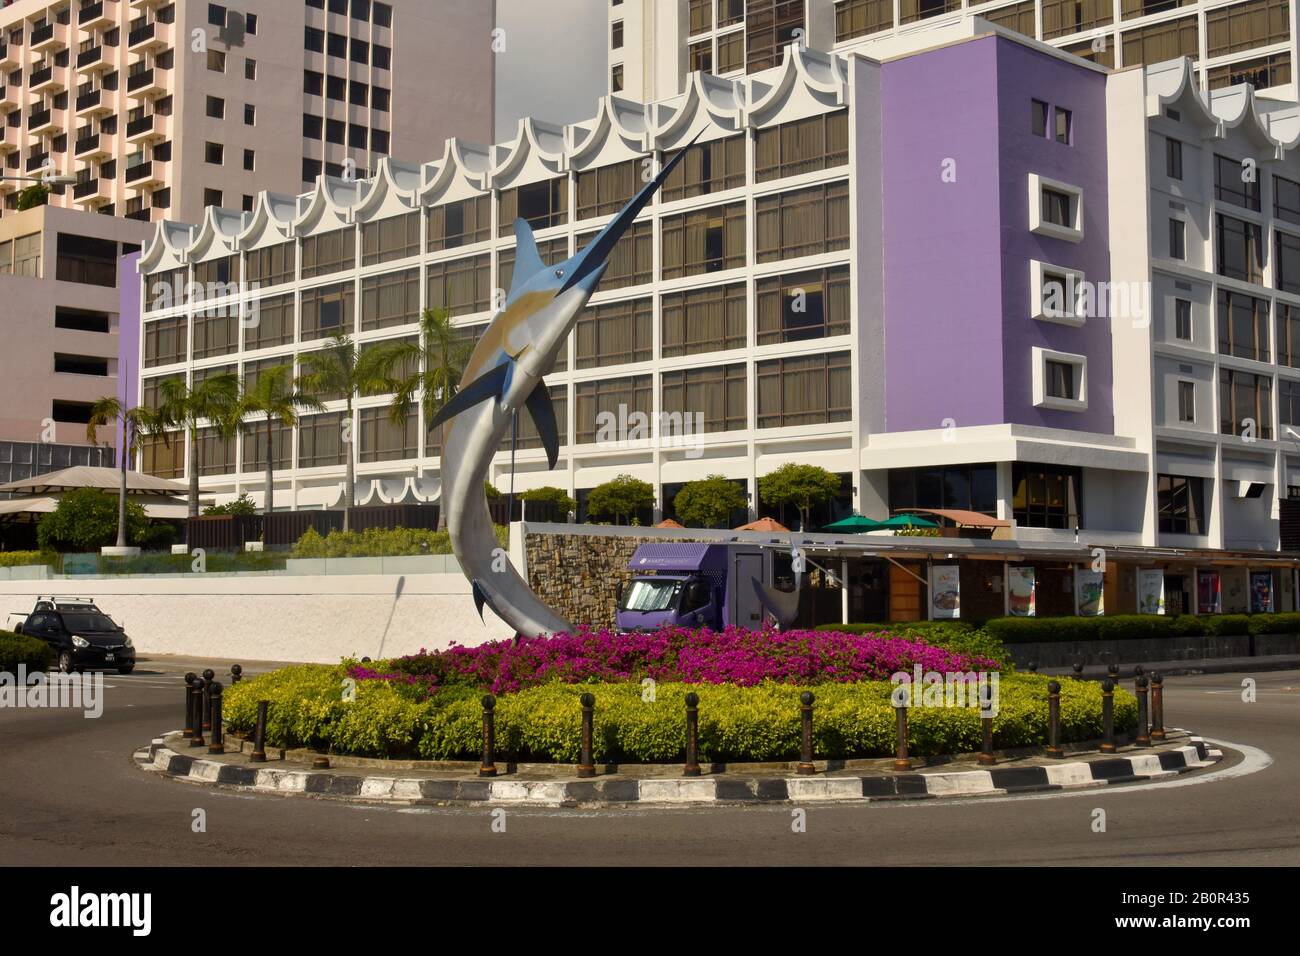 Marlin-Statue im Hafengebiet von Kota Kinabalu, Sabah, Borneo, Malaysia Stockfoto